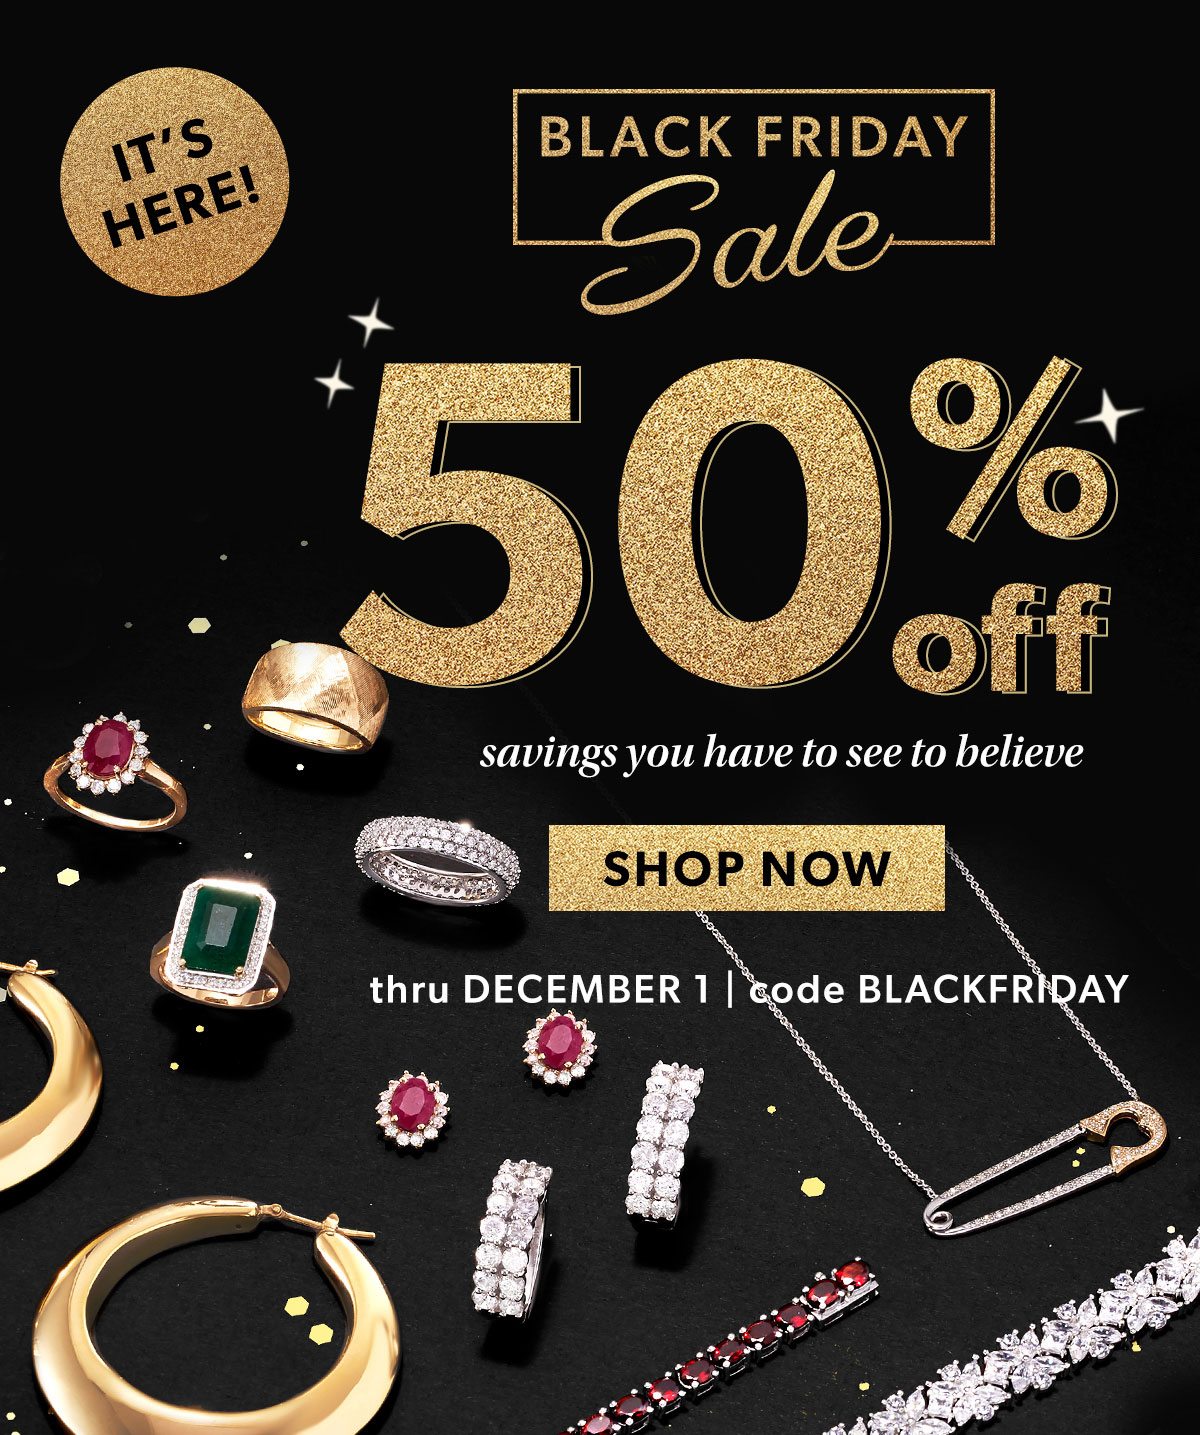 Black Friday Sale. 50% Off. Shop Now